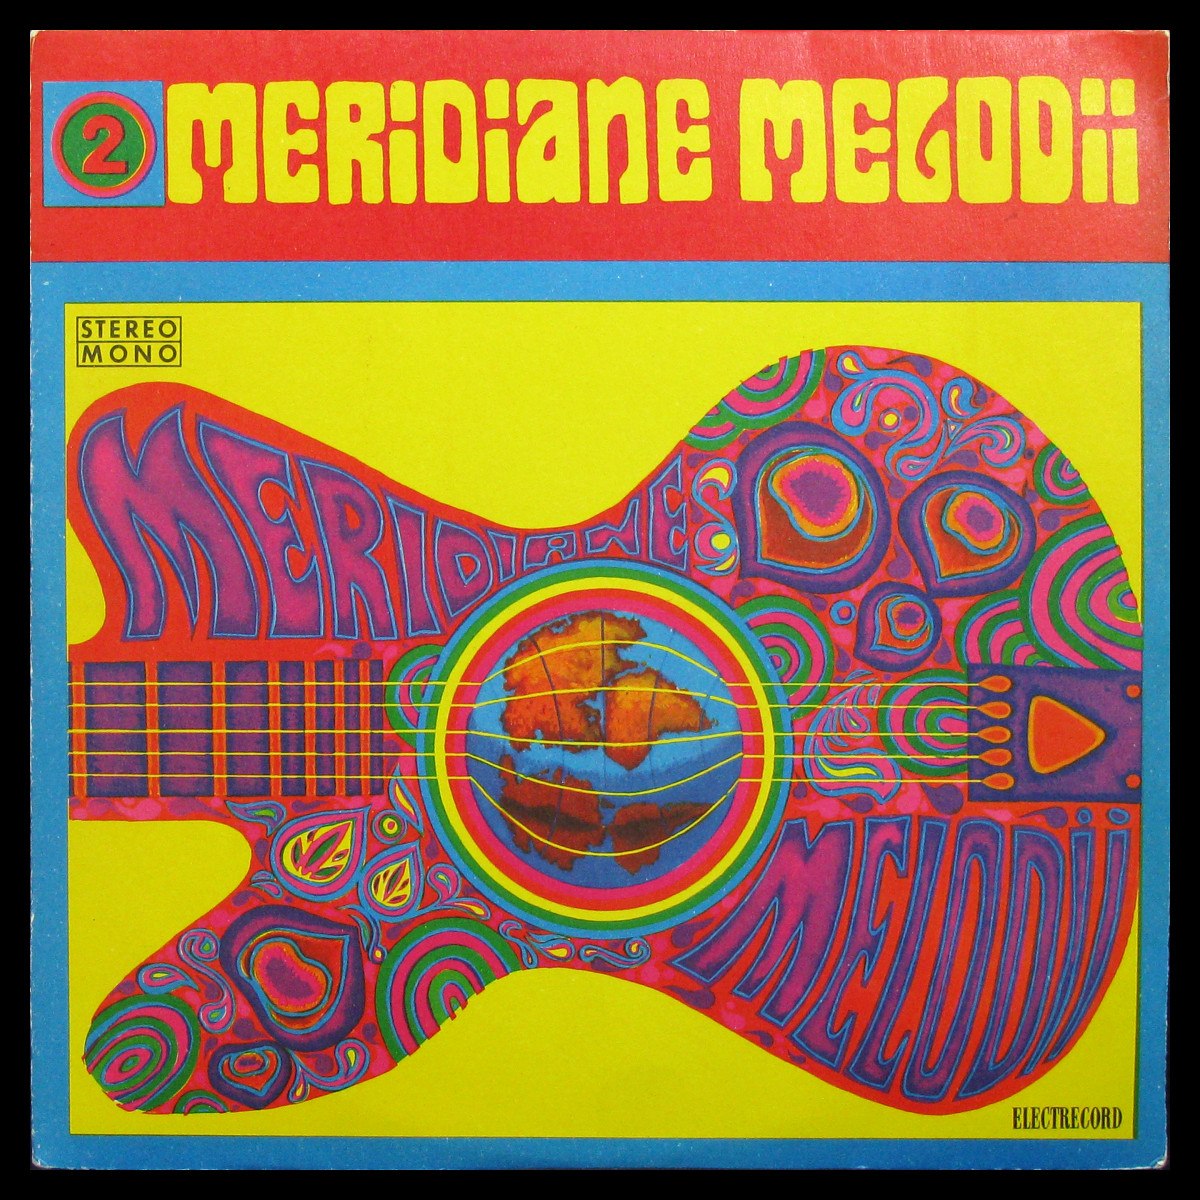 Meridiane Melodii 2